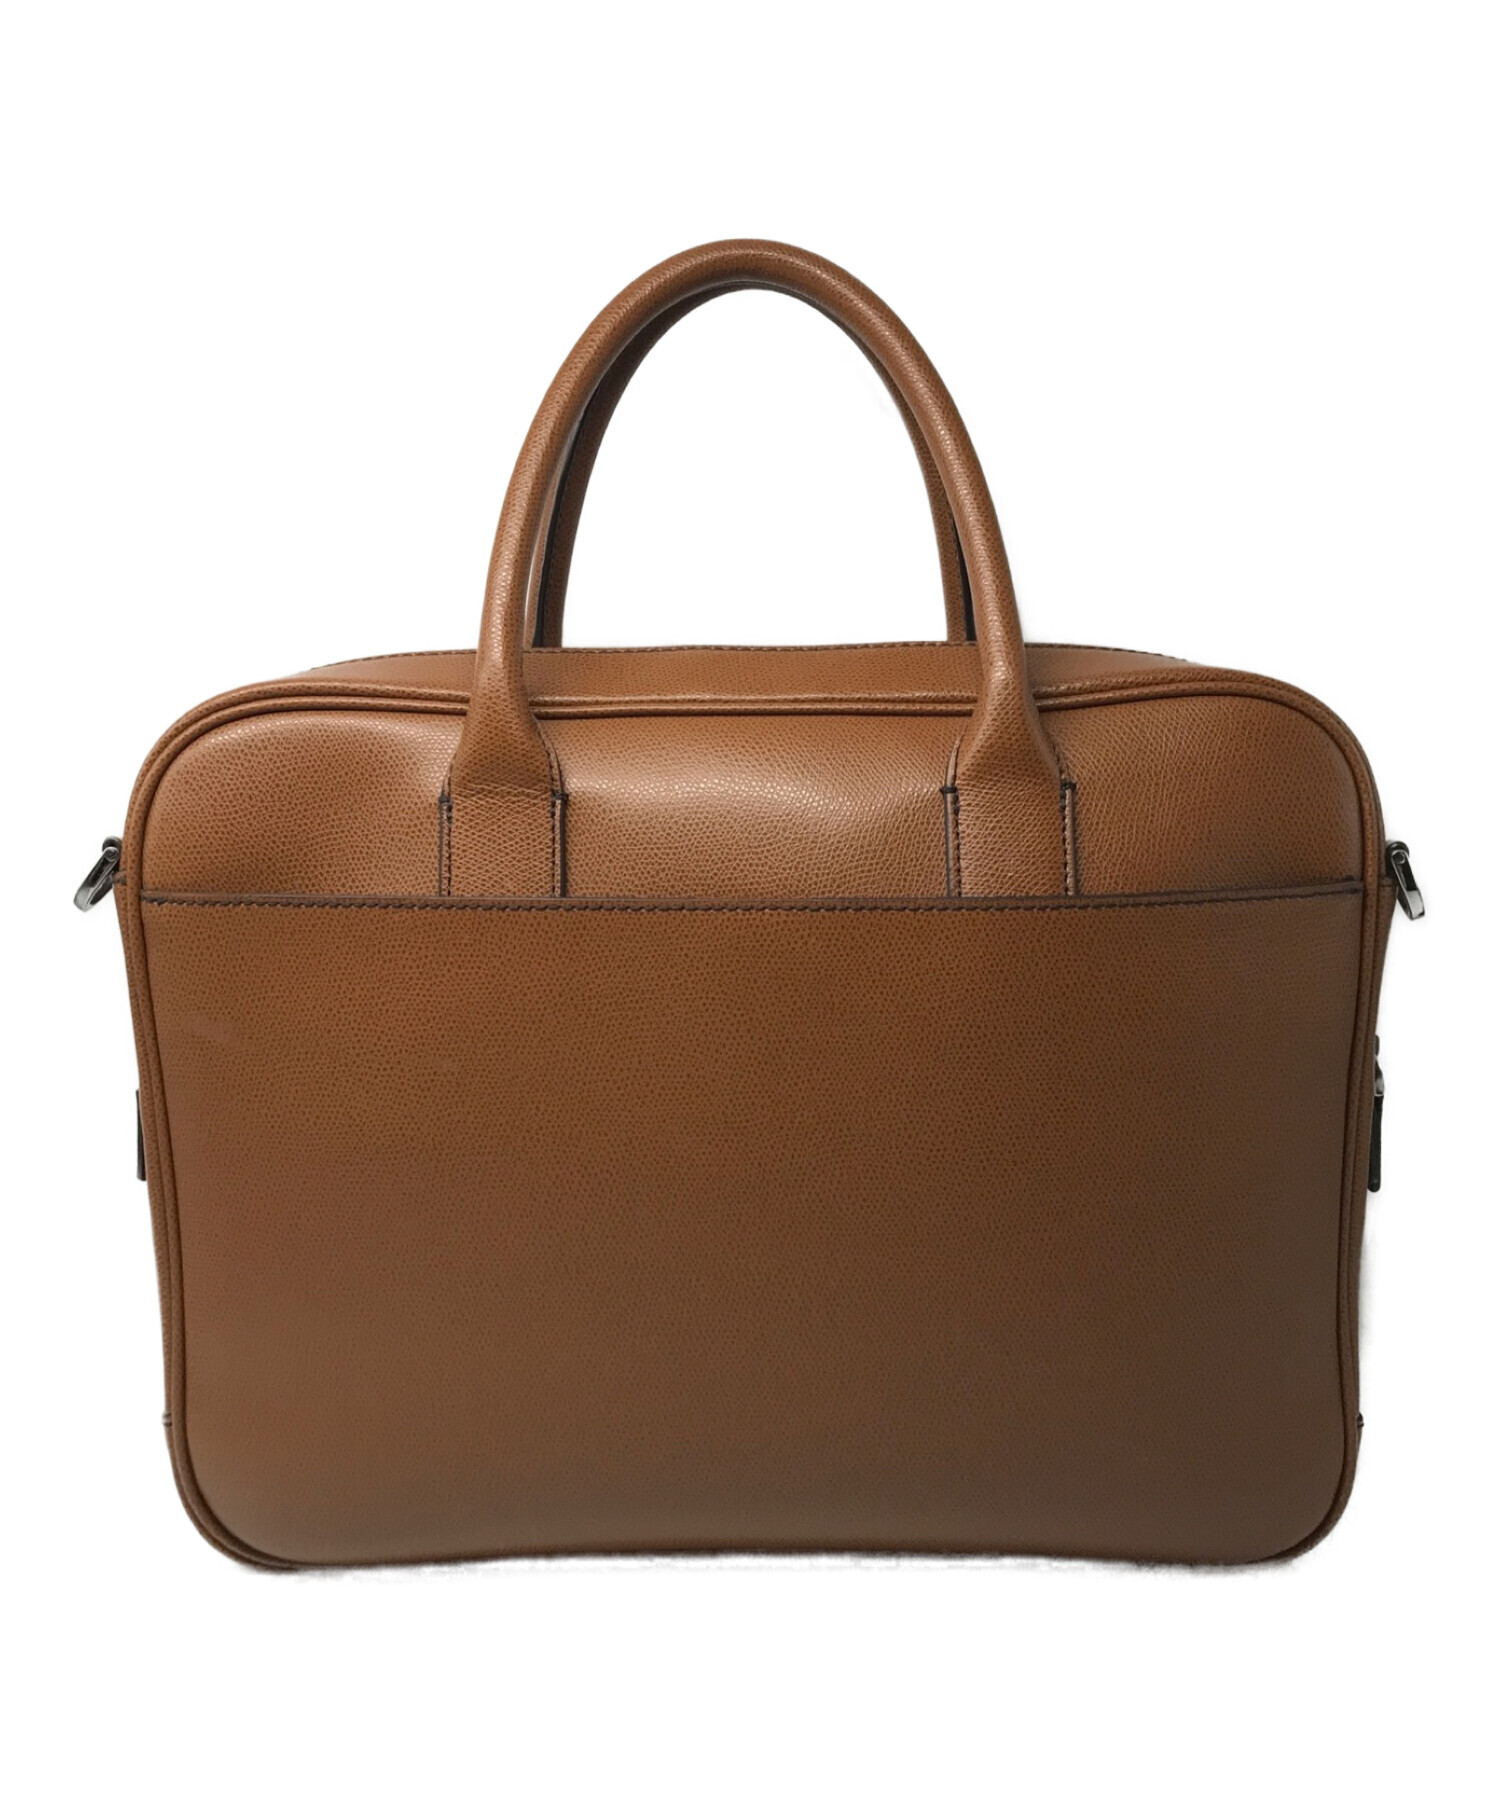 MICHAEL KORS (マイケルコース) Warren Compact Leather Briefcase Bag ブラウン